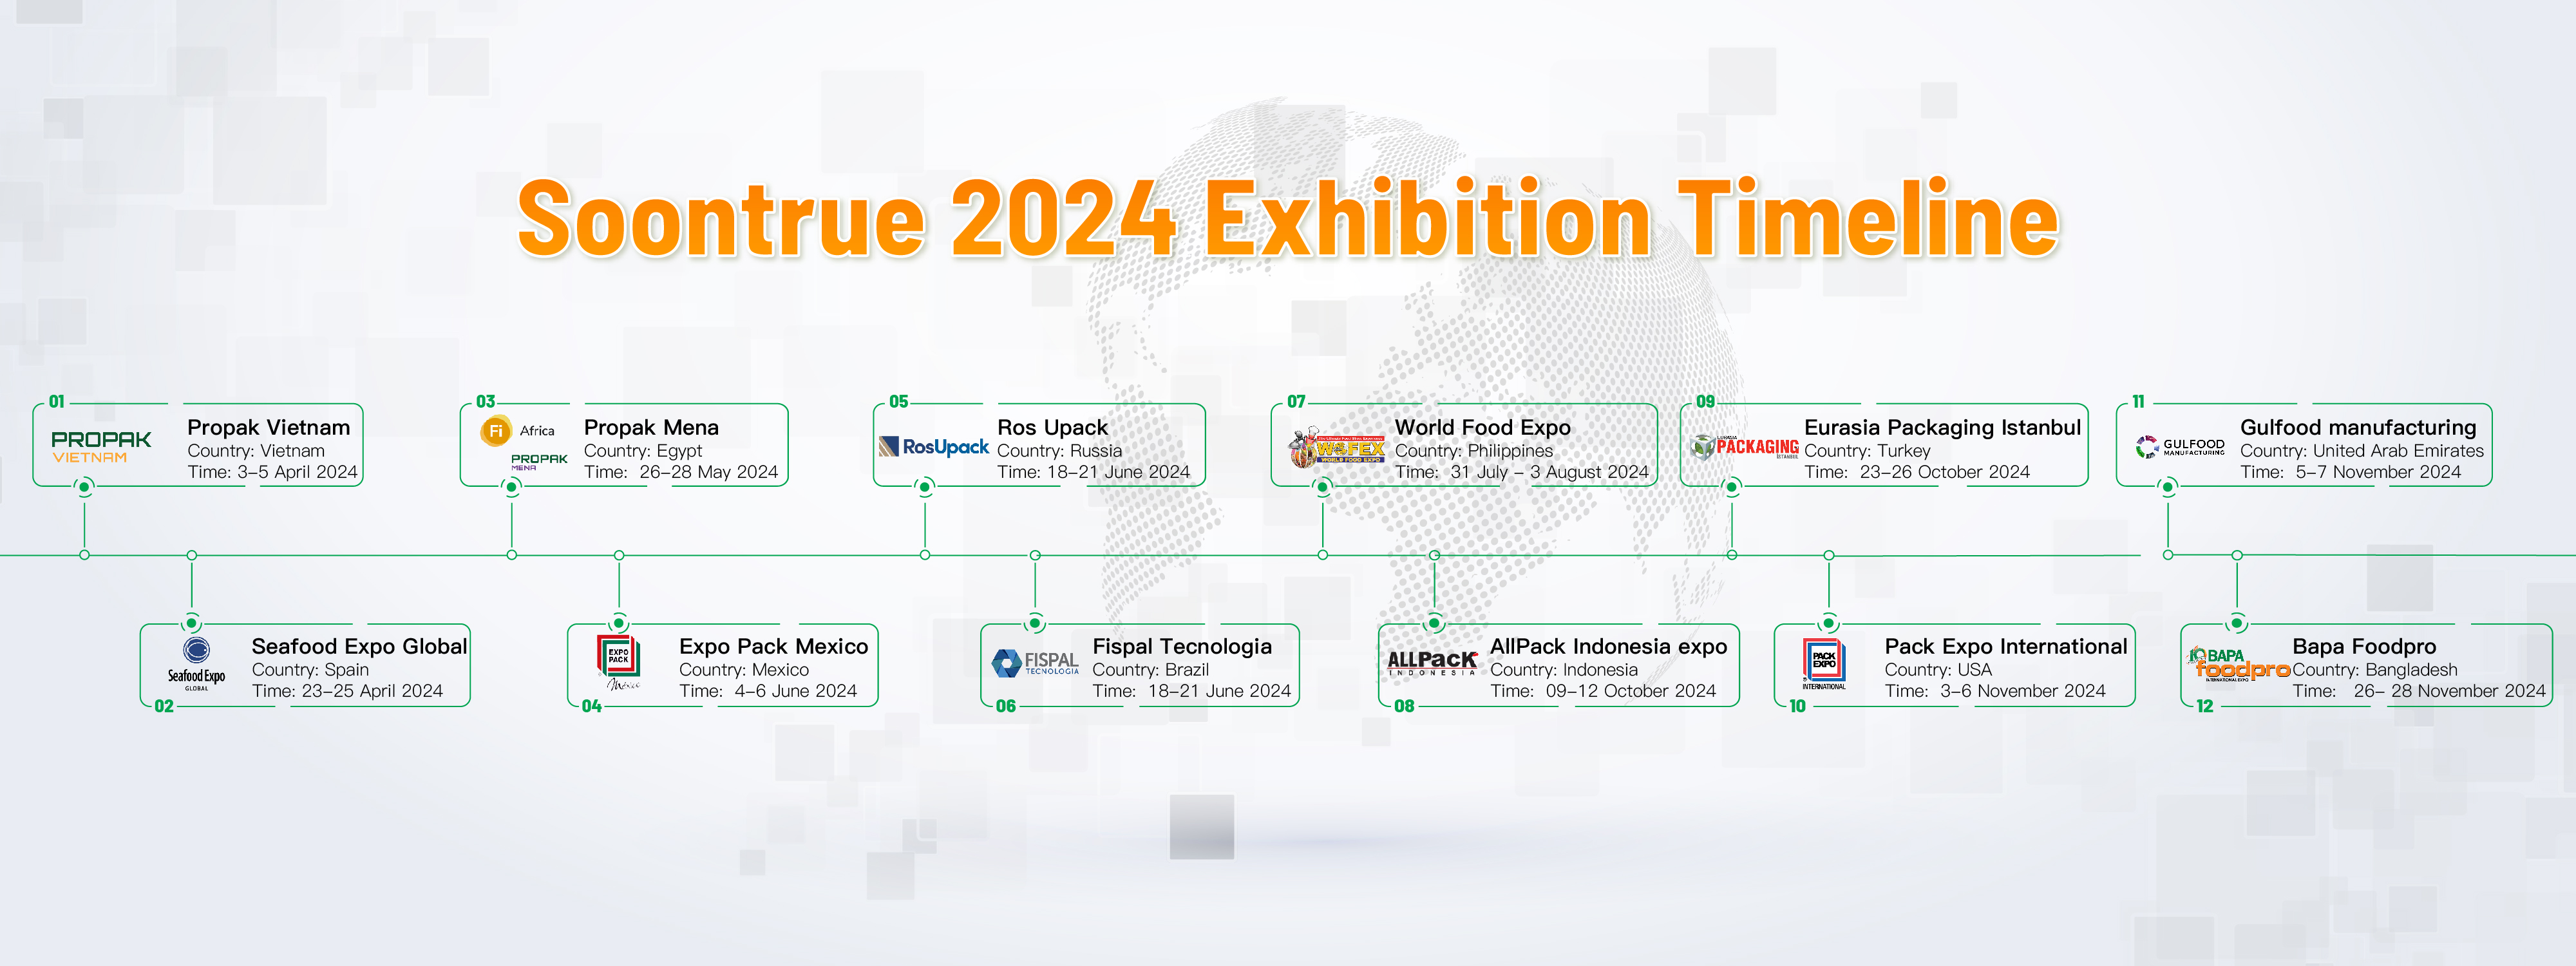 Soontrue 2024 Exhibition Timeline - Where Will We Meet?